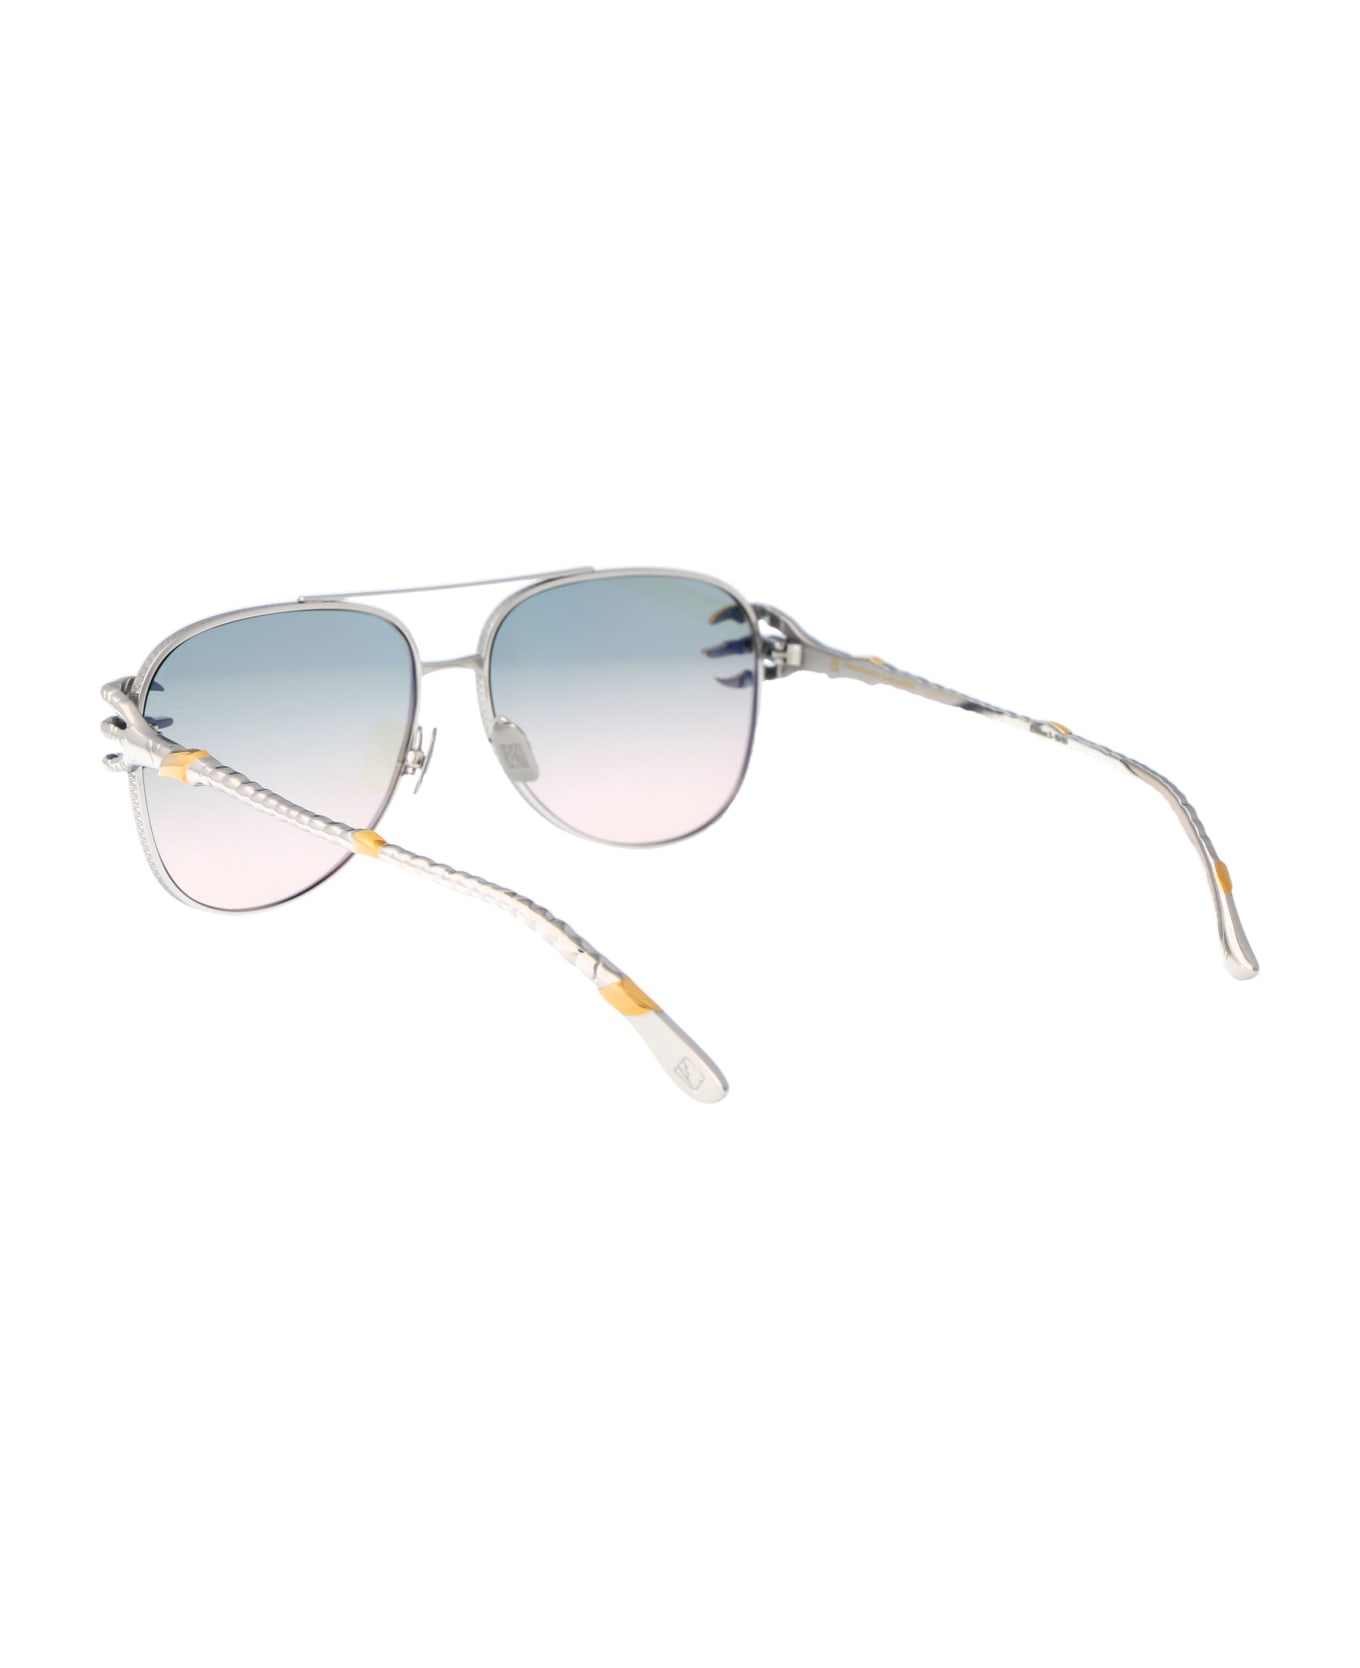 Anna-Karin Karlsson Claw Voyage Sunglasses - White Gold Blush サングラス